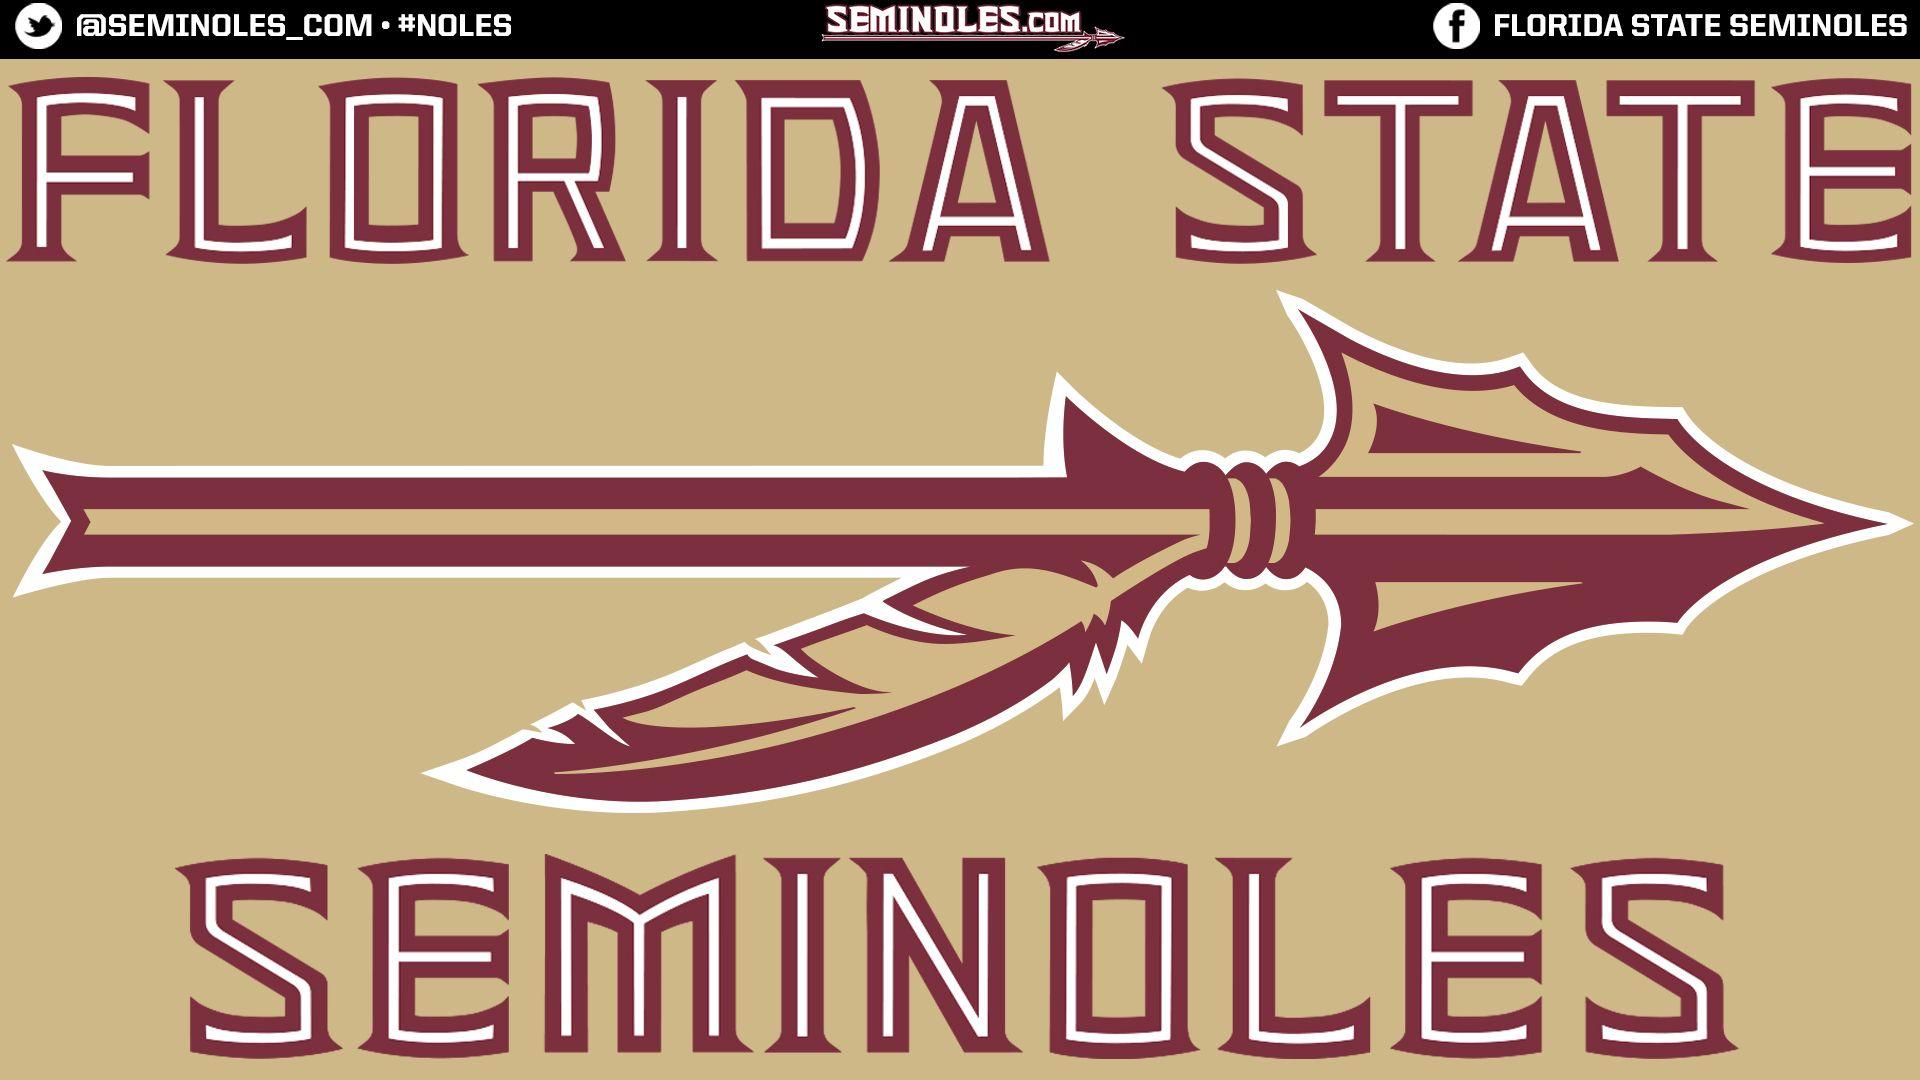 Florida State Seminoles New Logo - Seminoles.com Desktop Wallpapers